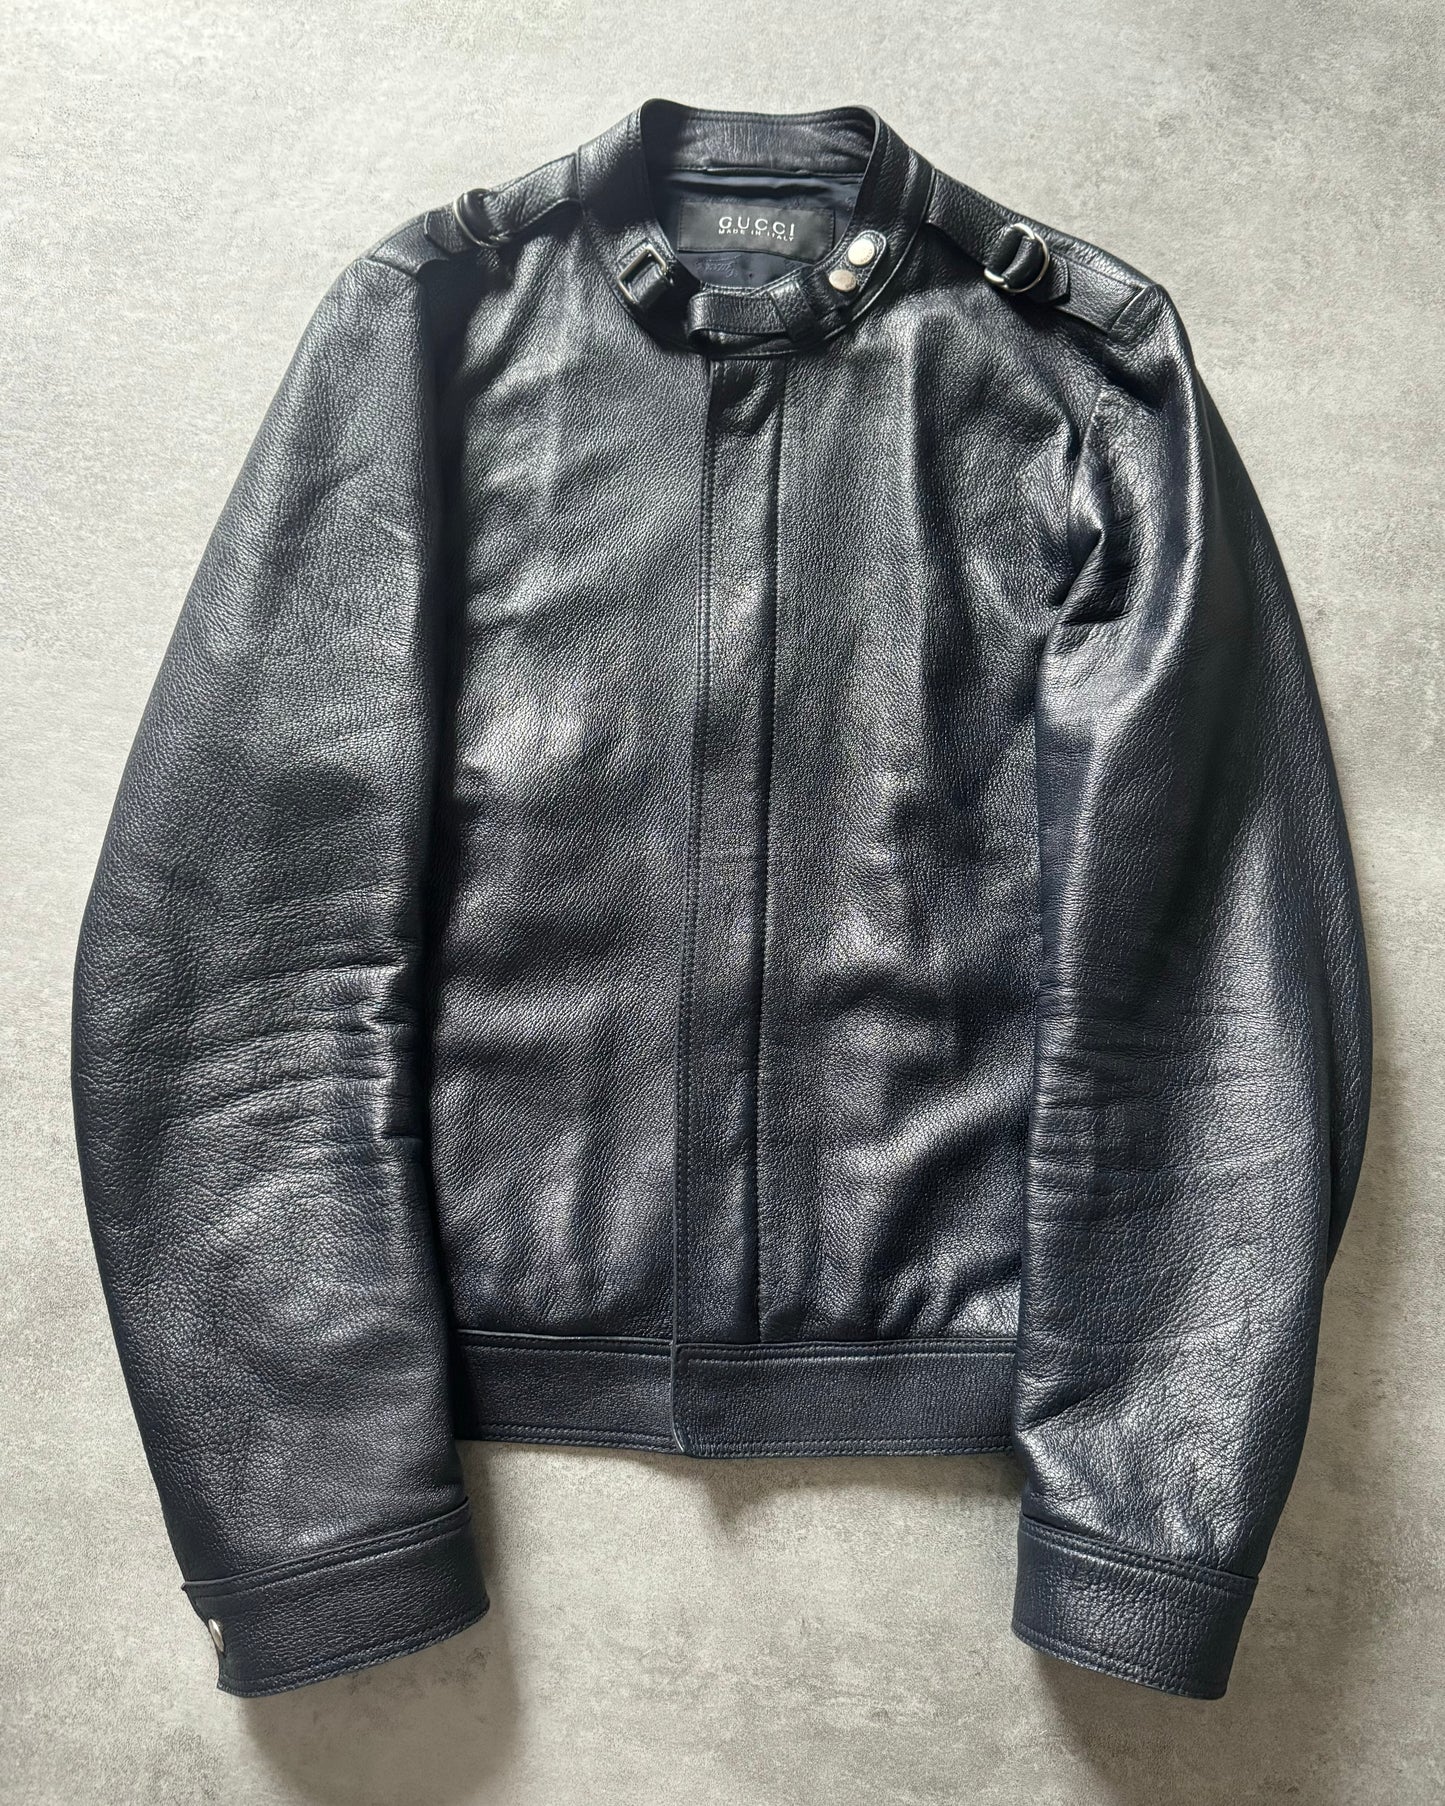 Gucci Navy Biker Leather Jacket by Frida Giannini (M)